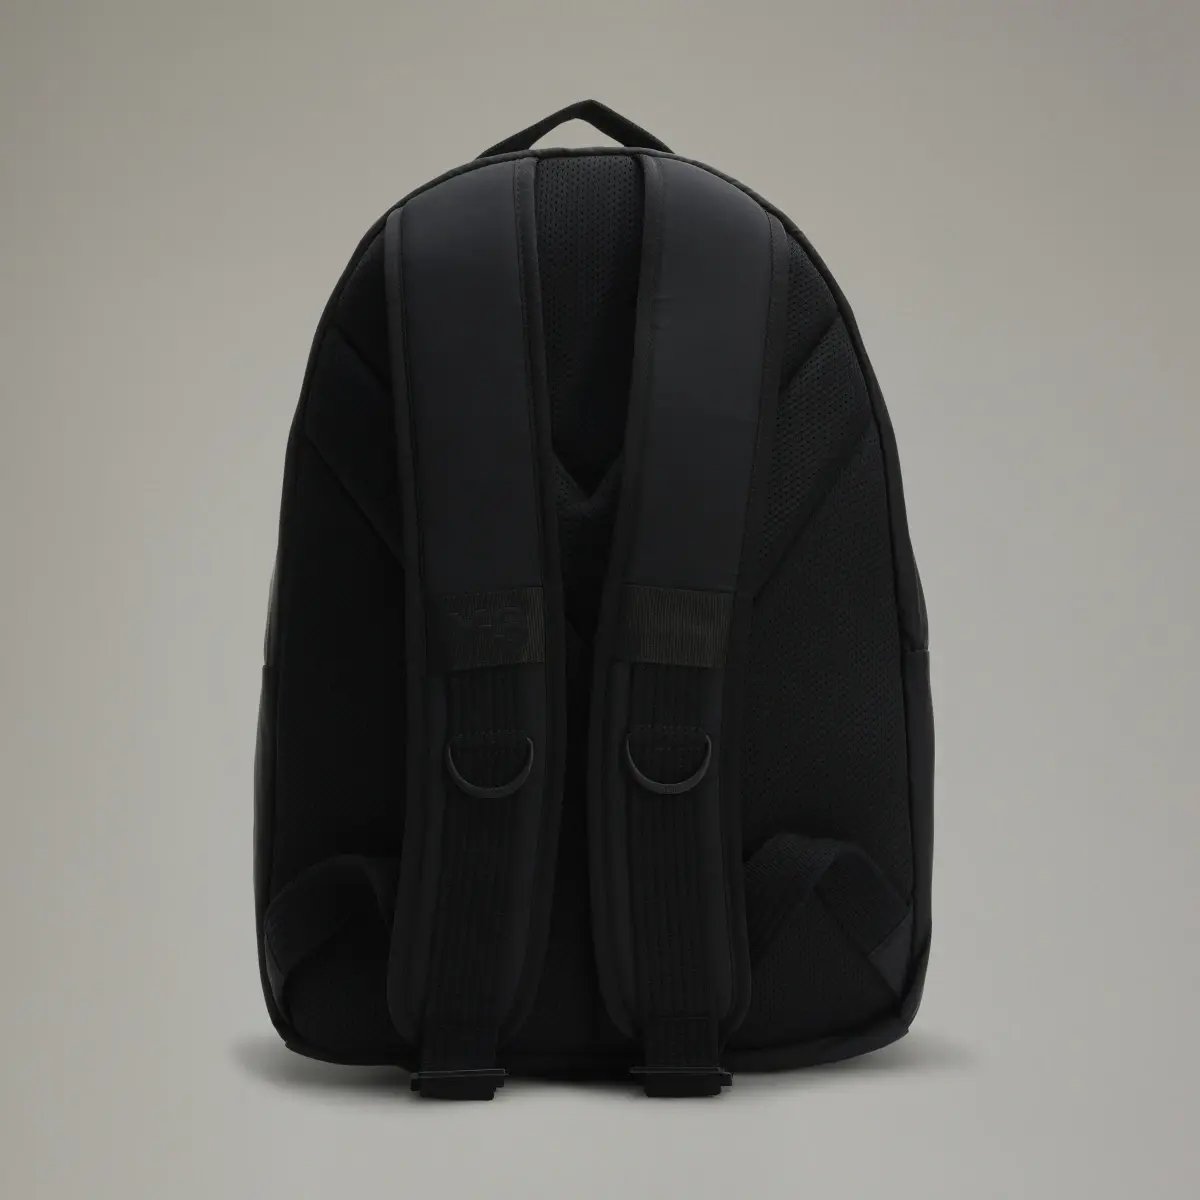 Adidas Y-3 Tech Backpack. 3